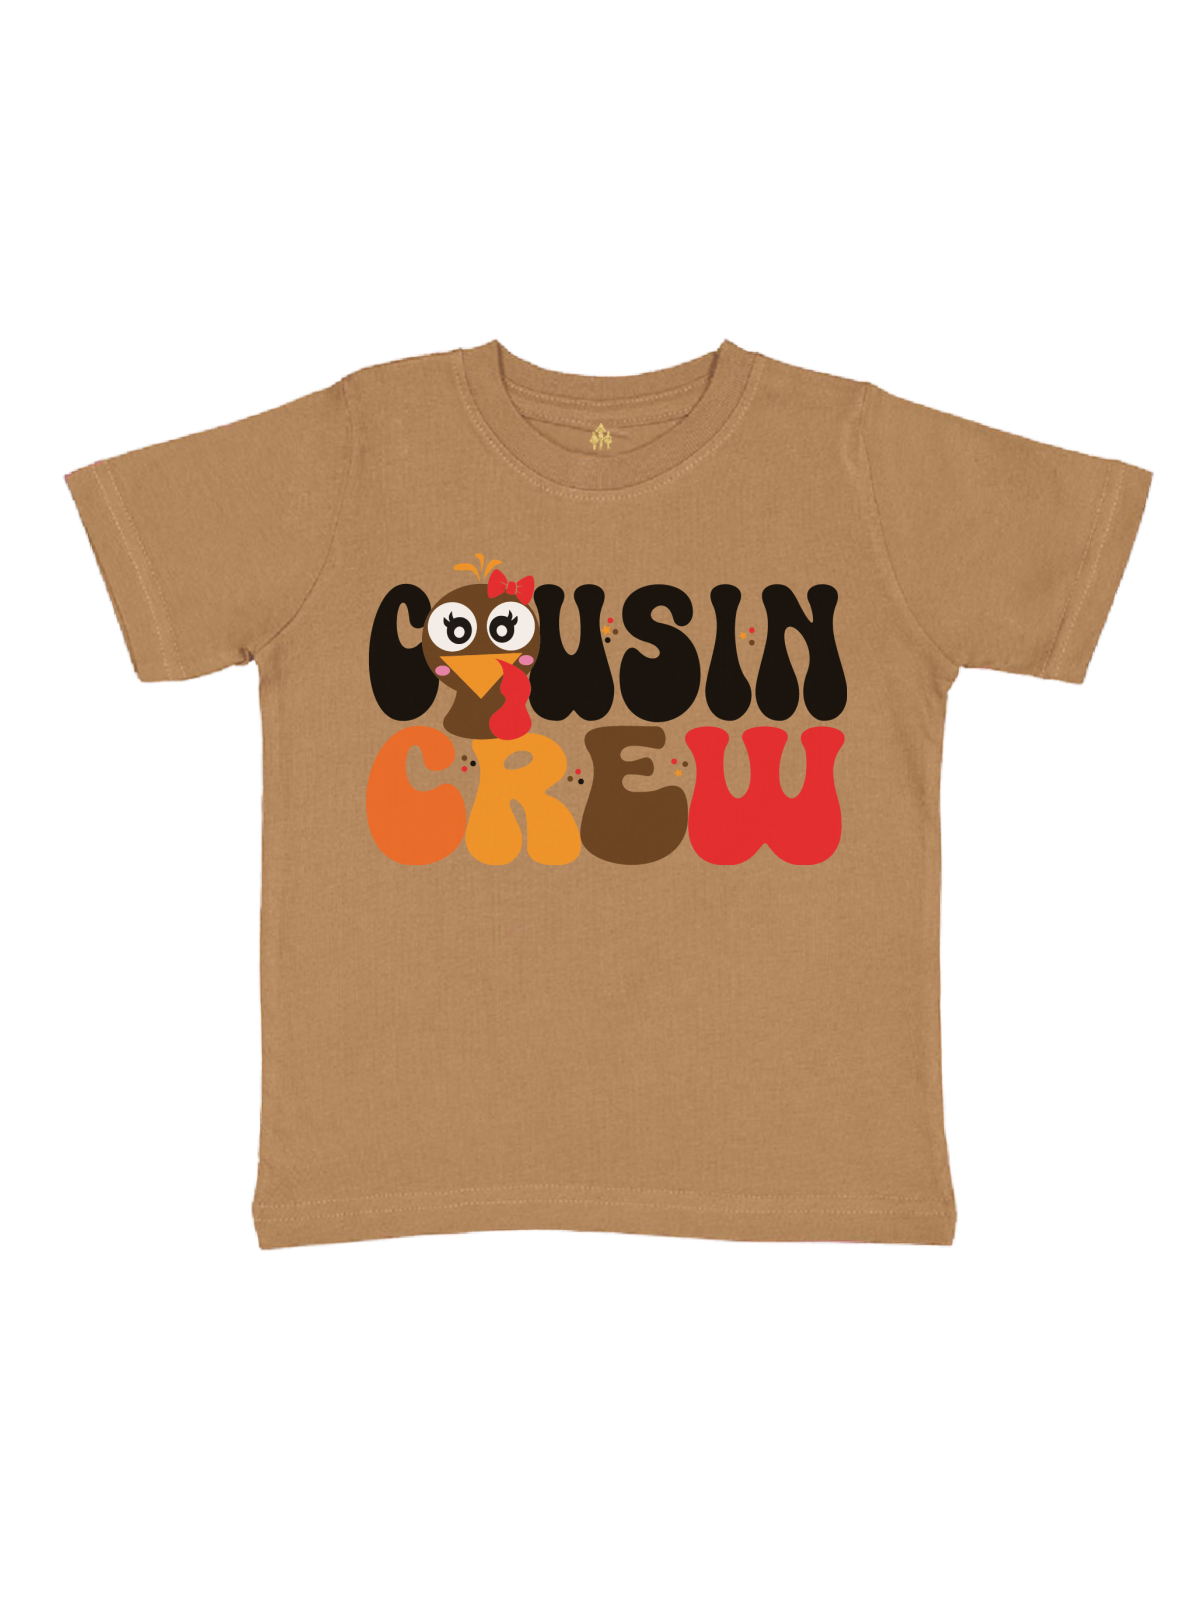 Cousin Crew Turkey Face Kids Shirt